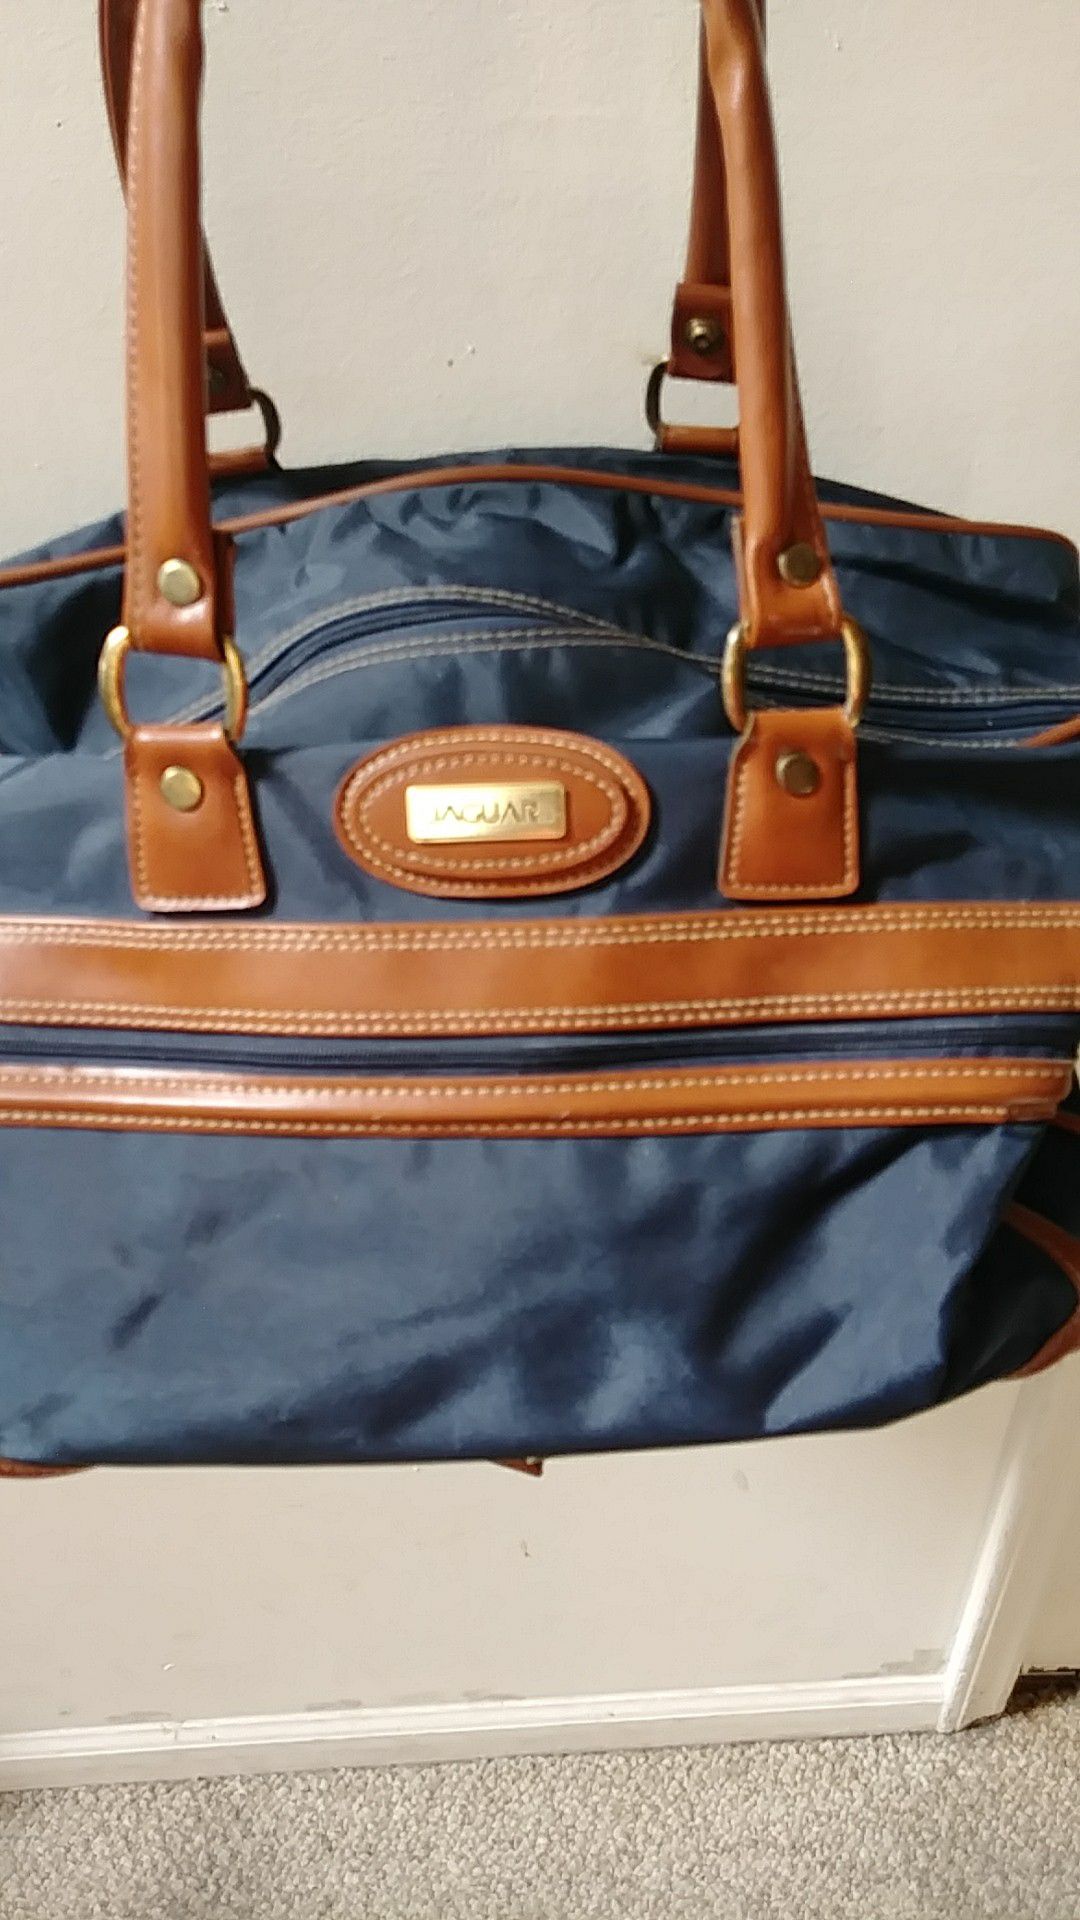 JAGUAR traveling bag